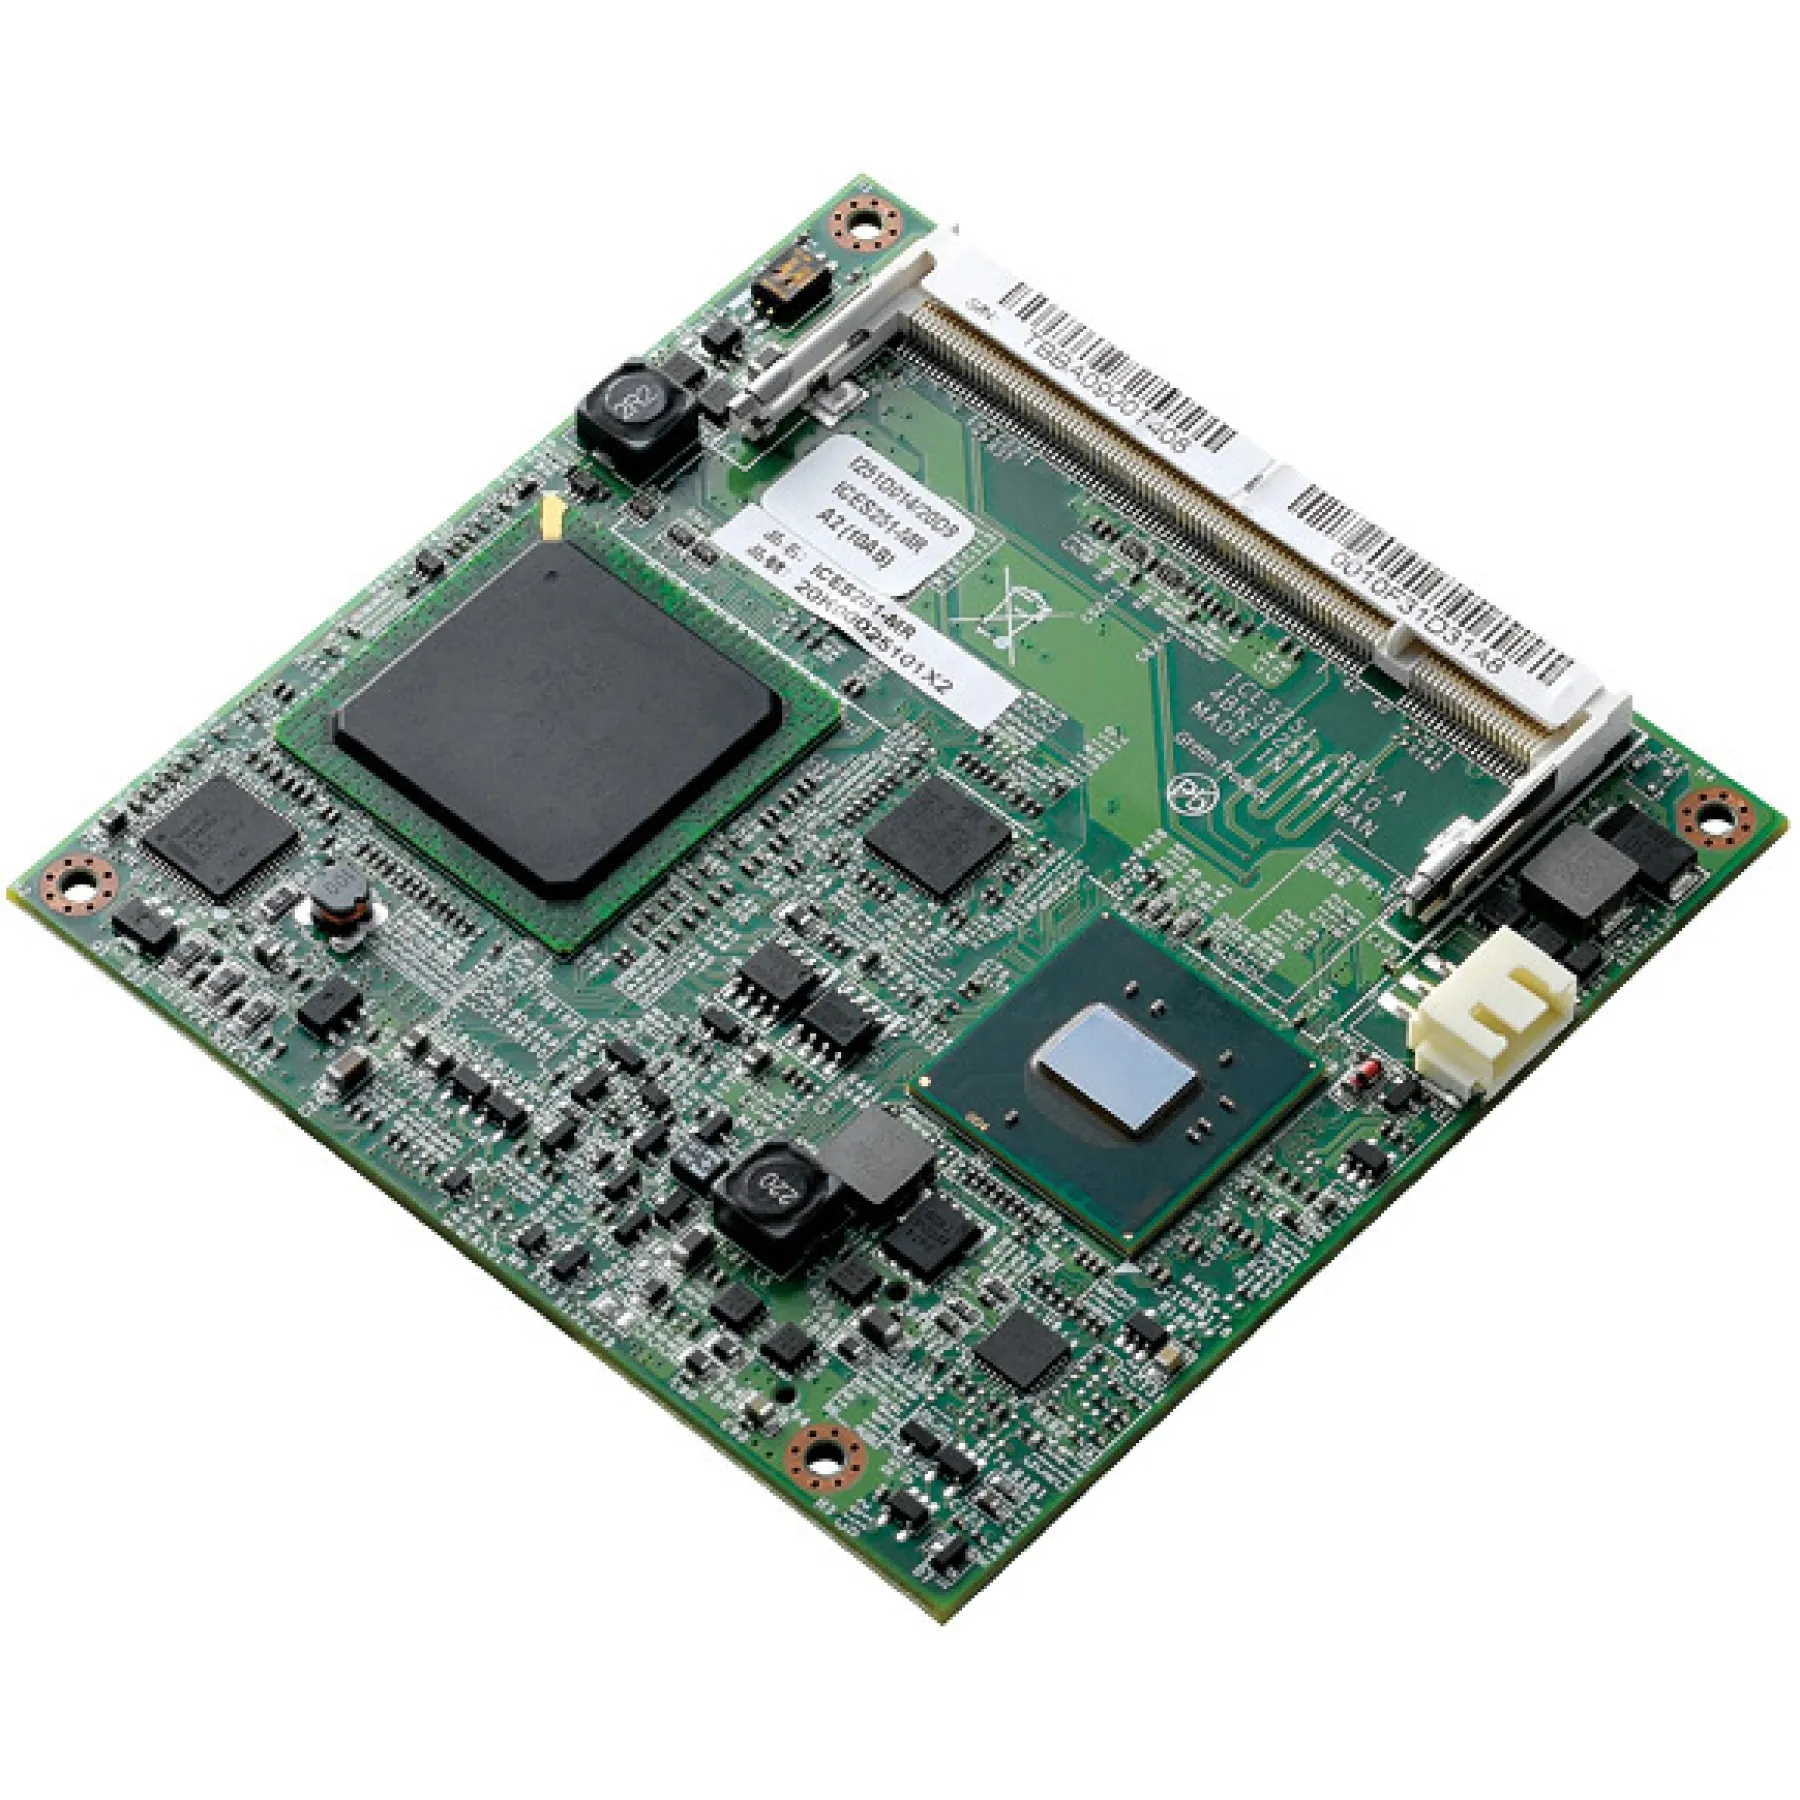 dood gaan Uitbreiding vallei ICES 251X COM Express Type 2 Compact Module with Intel® AtomTM N450 1.66GHz